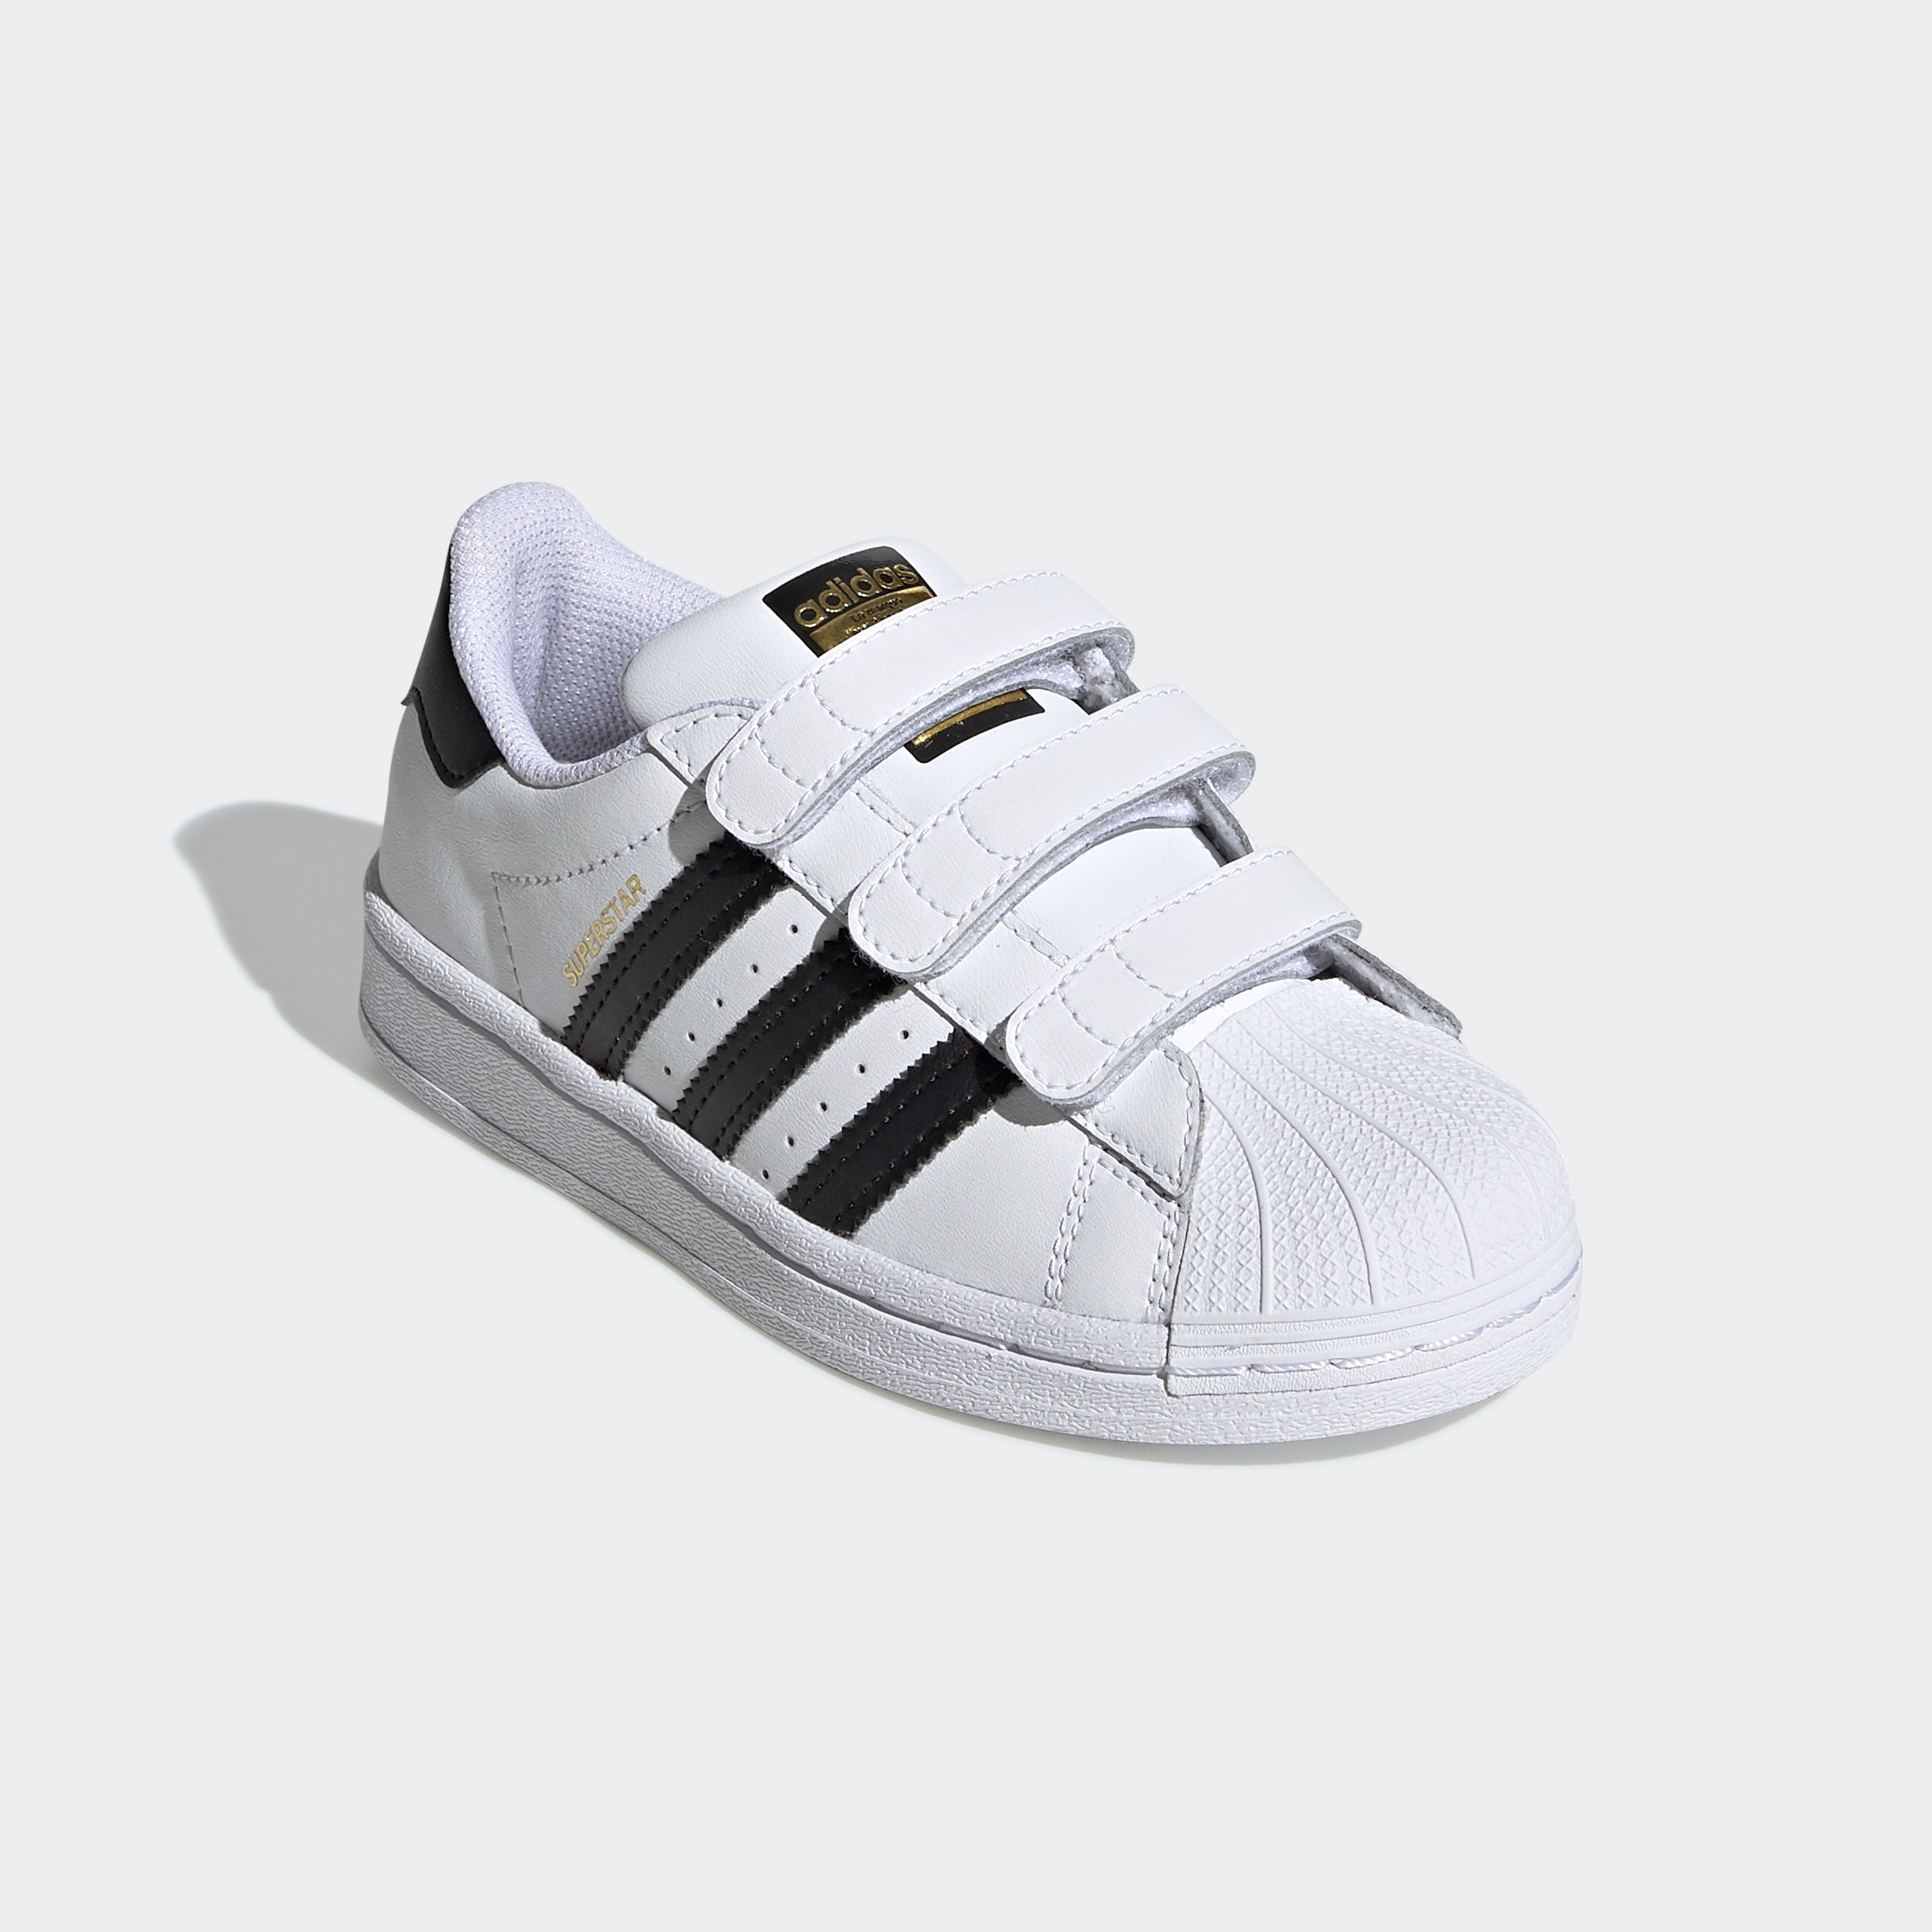 adidas Unisex-Kinder Superstar Cf C Sneaker, FTWR White/Core Black/FTWR White, 35 EU